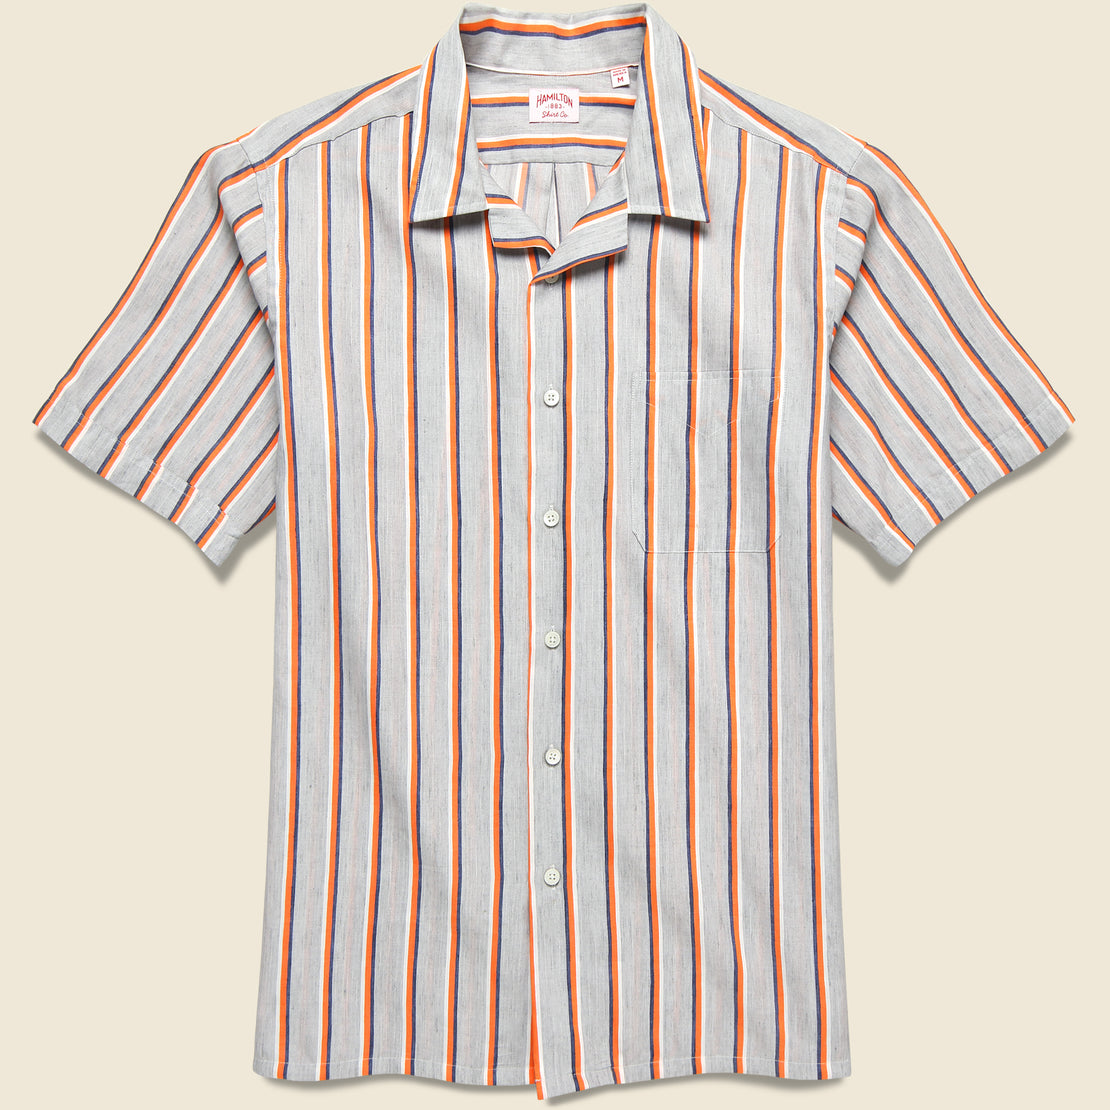 Hamilton Shirt Co. Textured Stripe Shirt - Grey/Orange